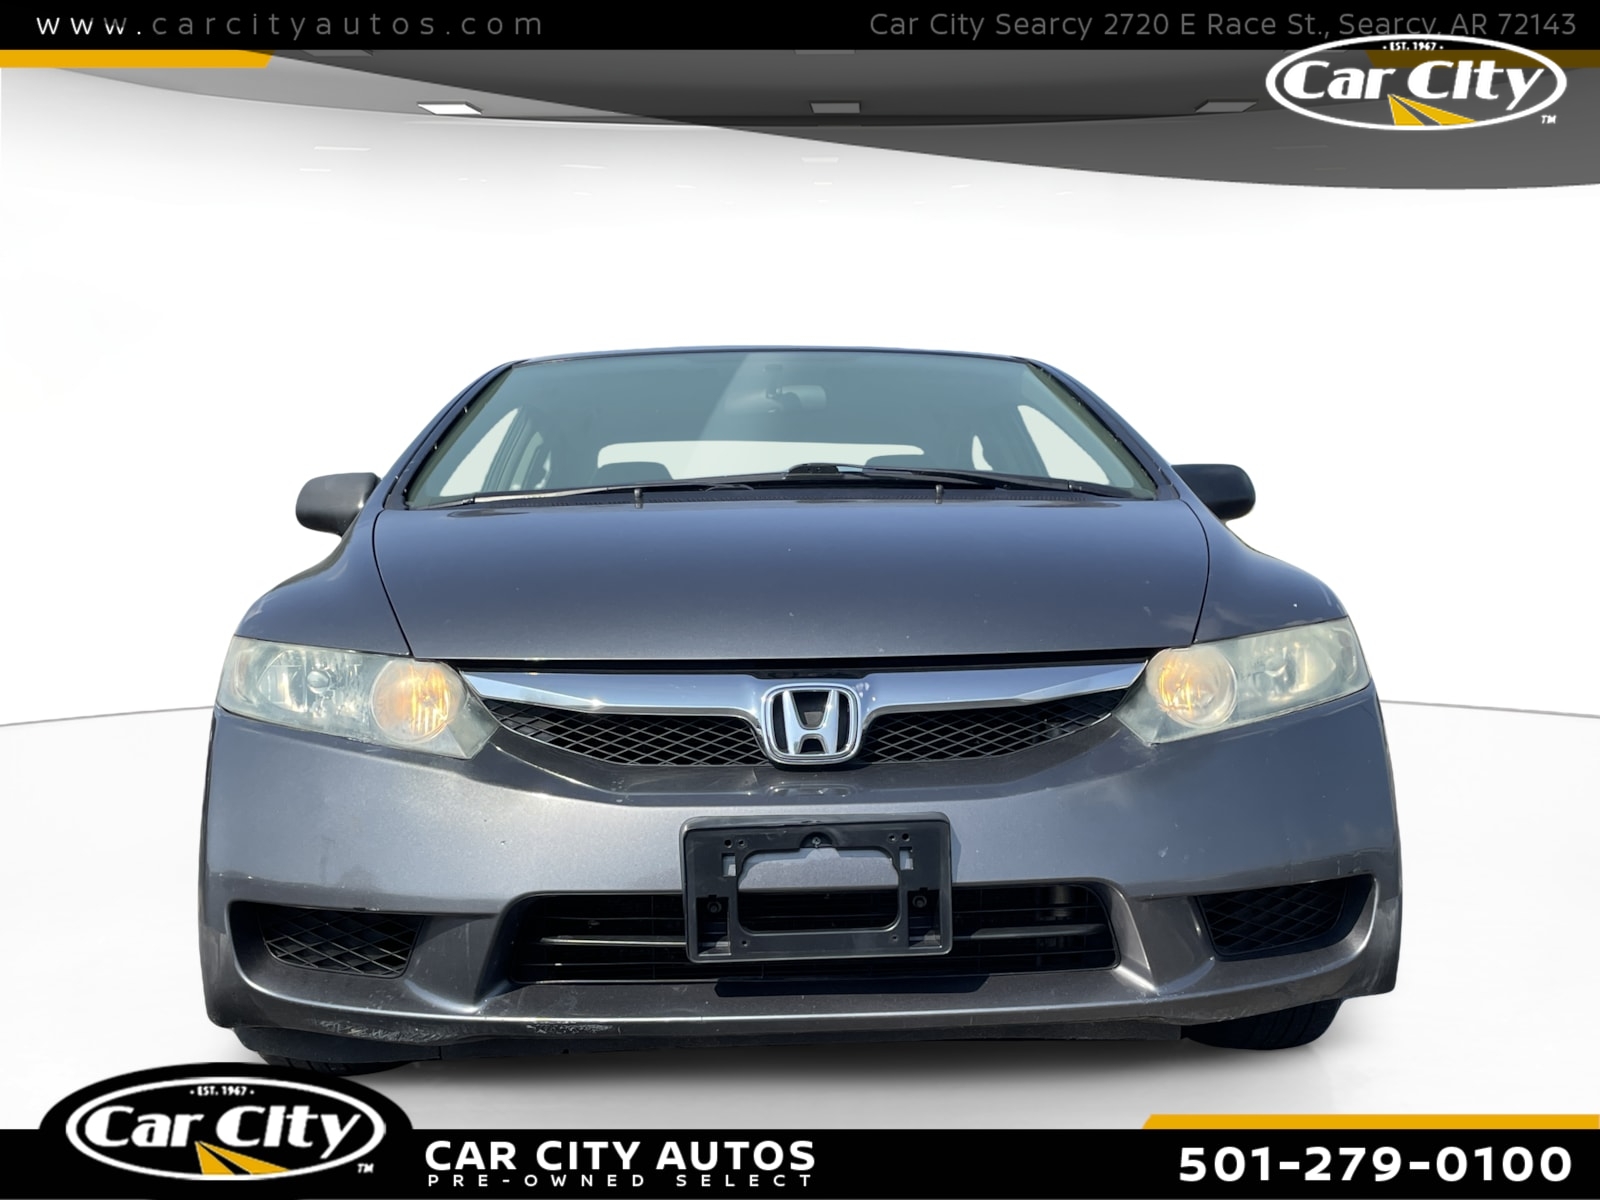 2010 Honda Civic LX  - AE003428  - Car City Autos